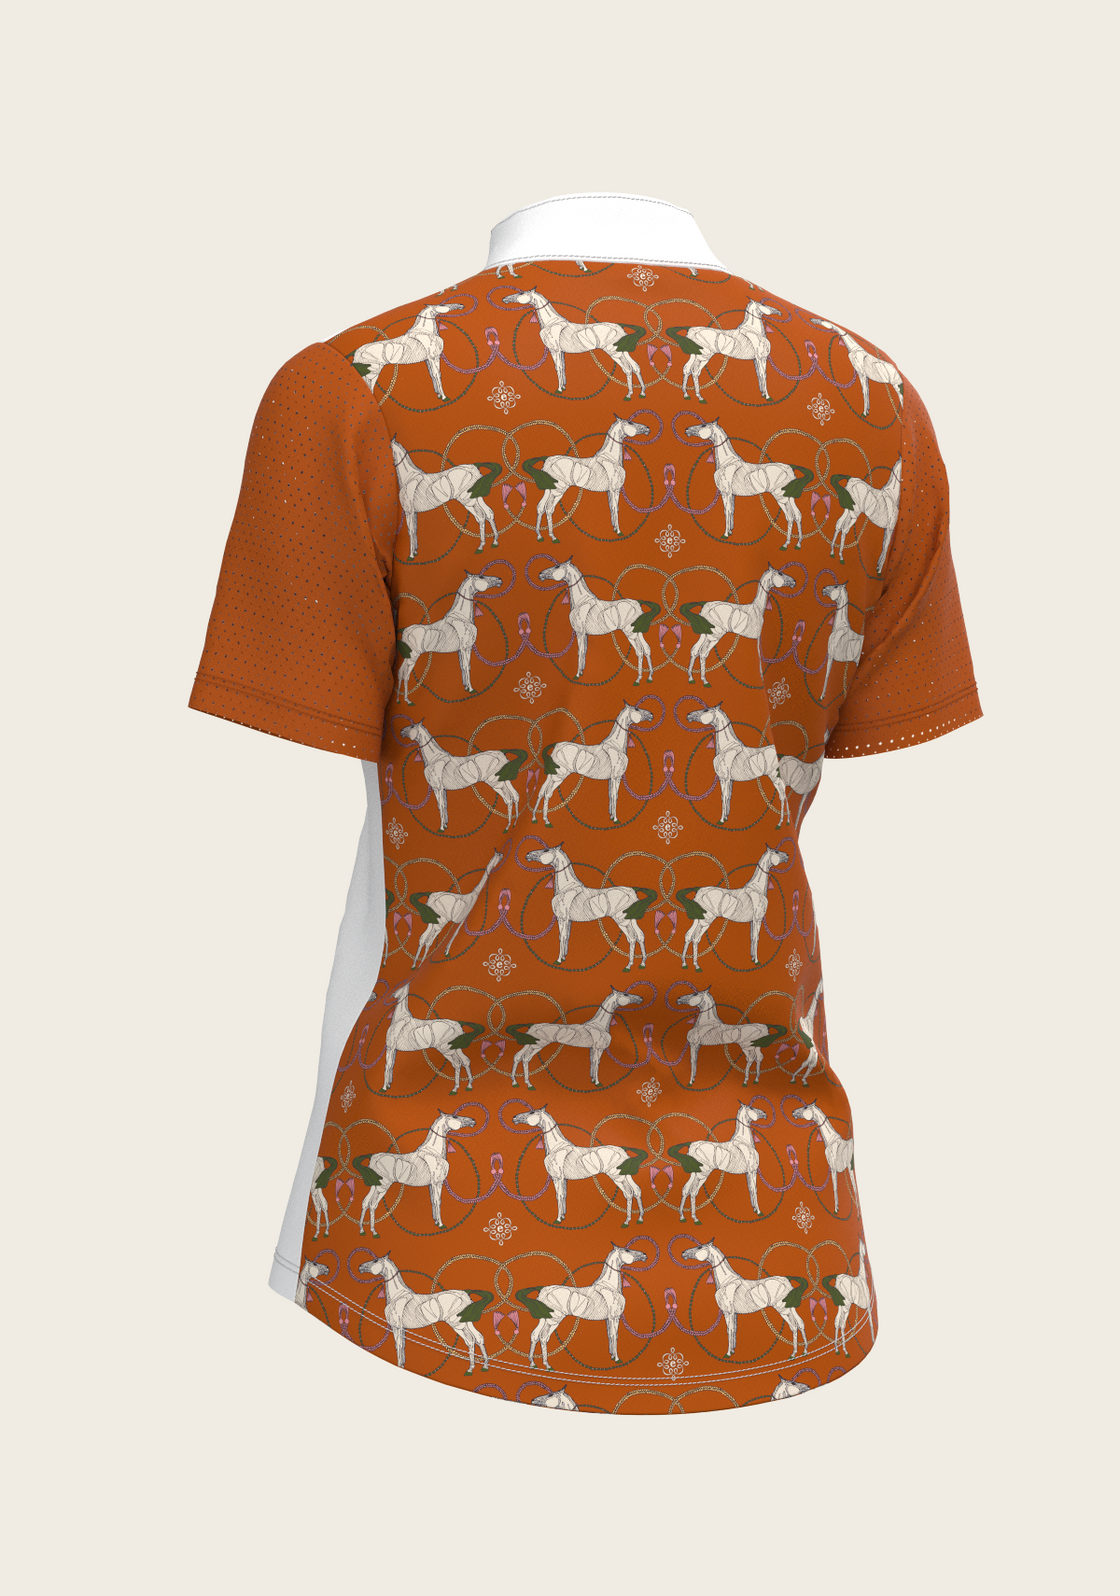 Roped Horses on Tan Short Sleeve Show Shirt